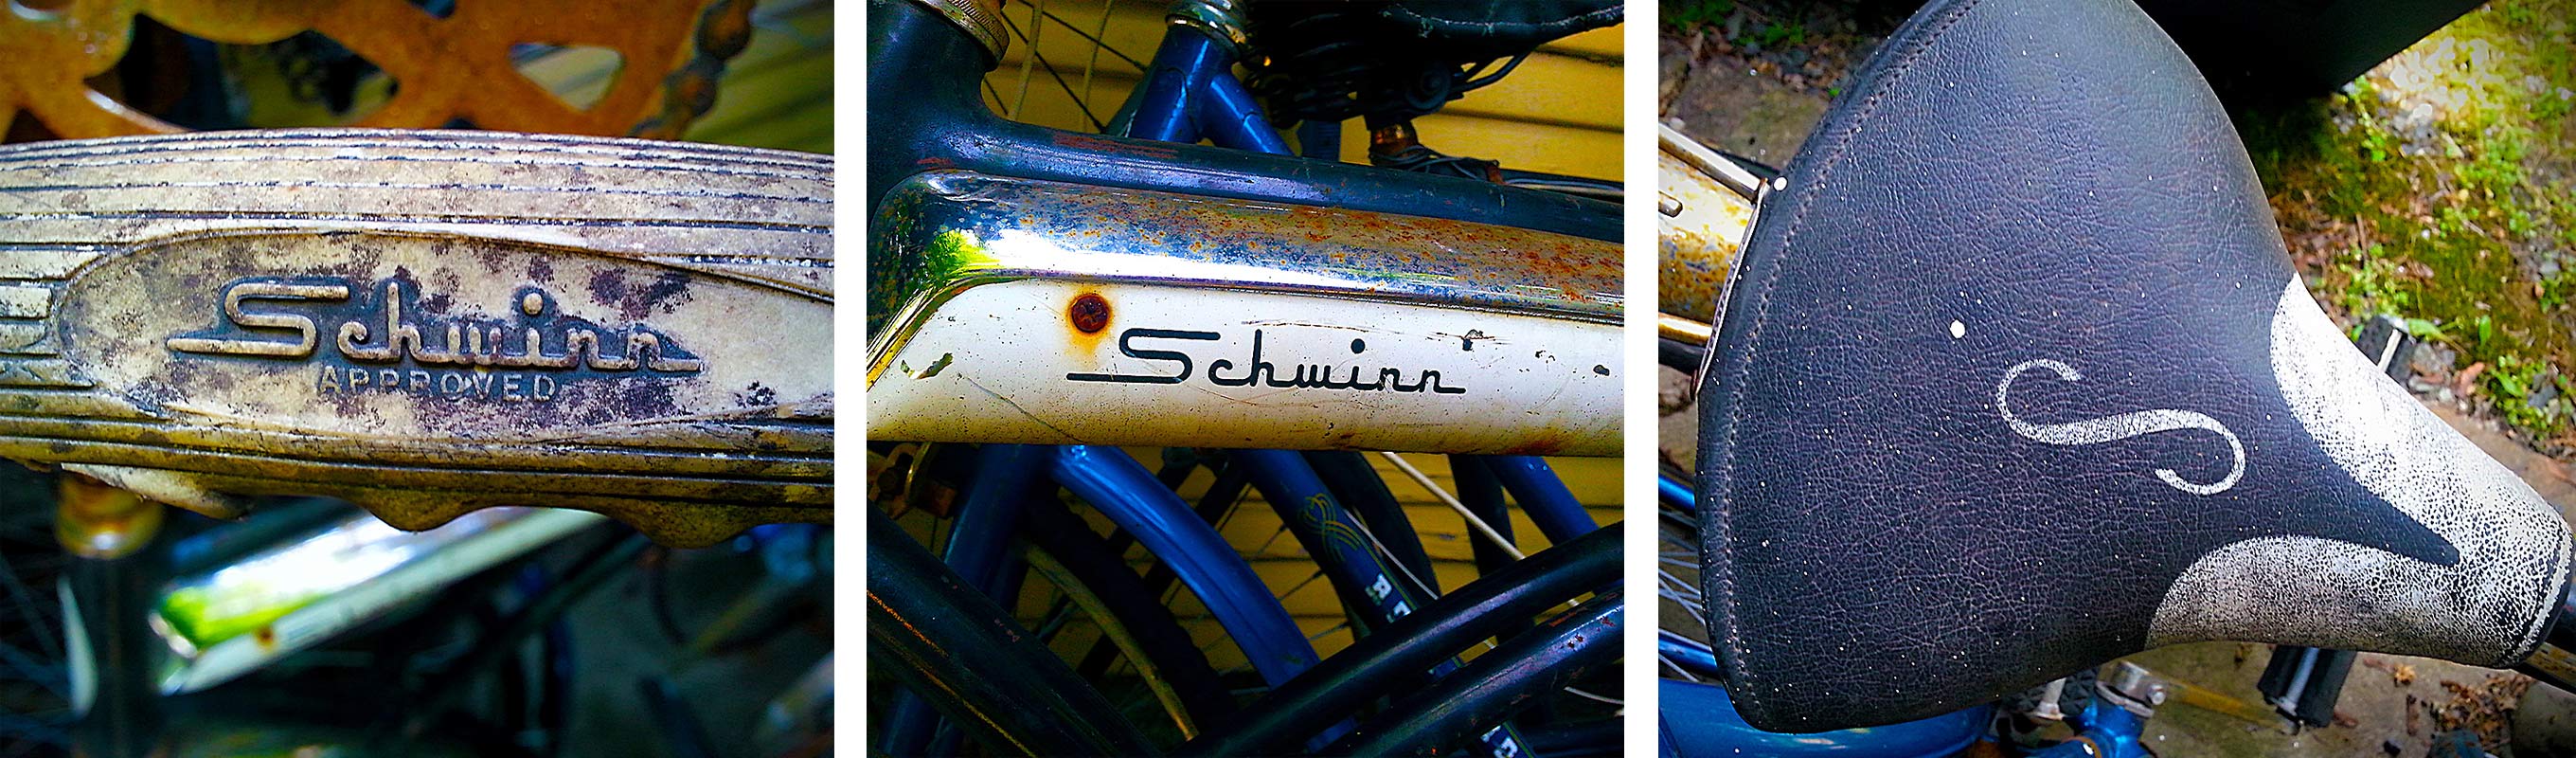 schwinn bike © 2014 bret wills